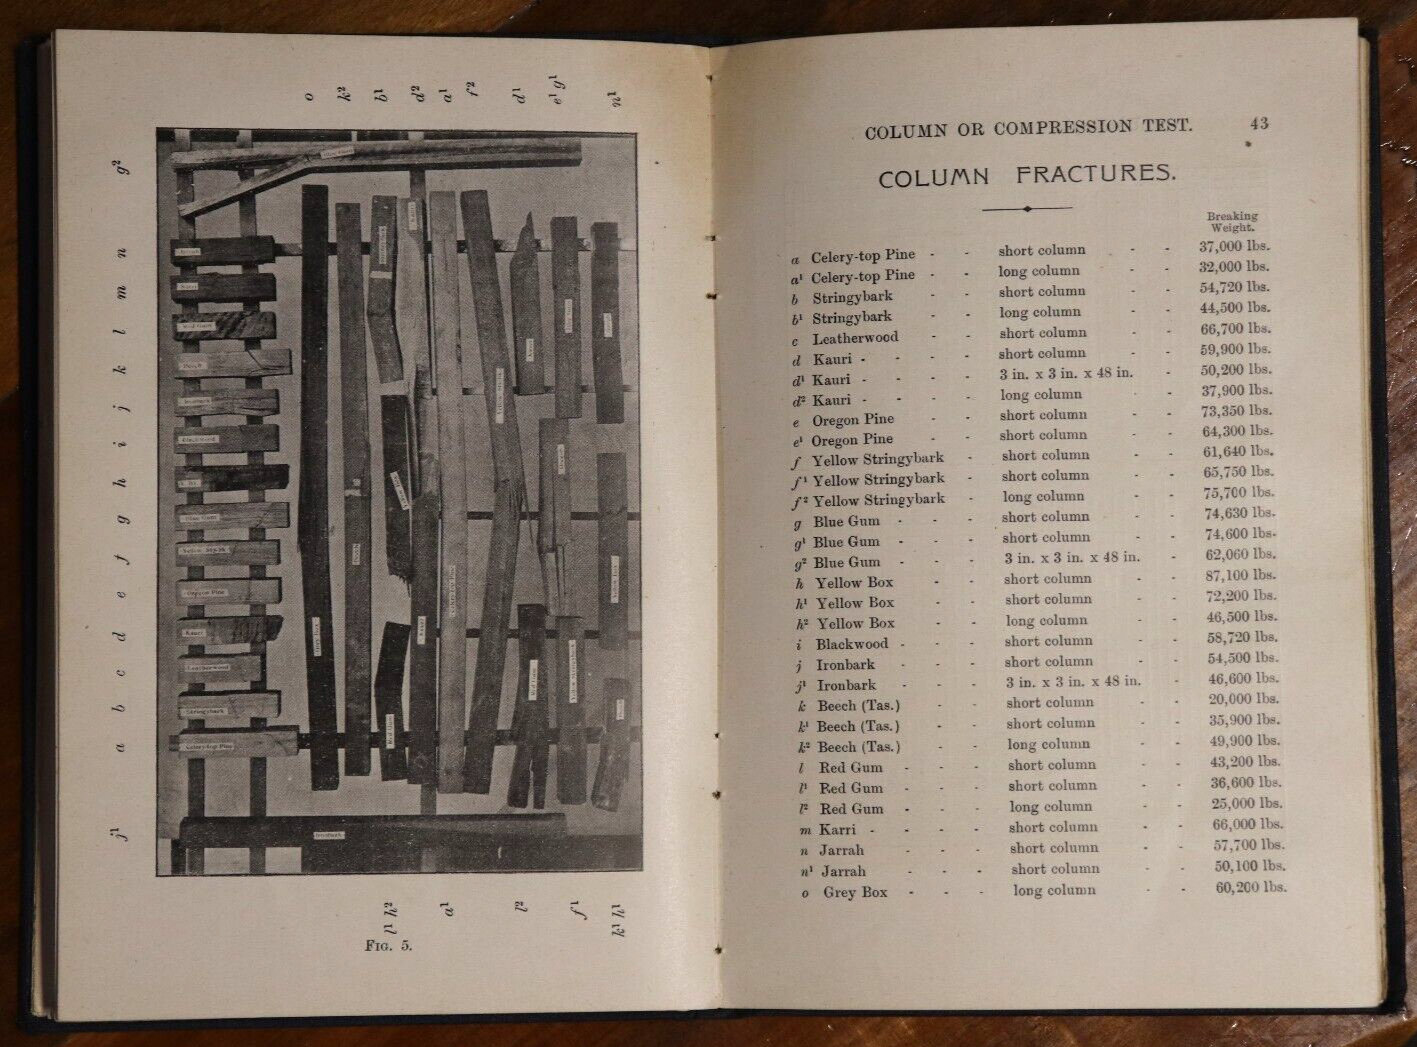 1900 Australian Timber by James Mann 1st Edition Australian History Book